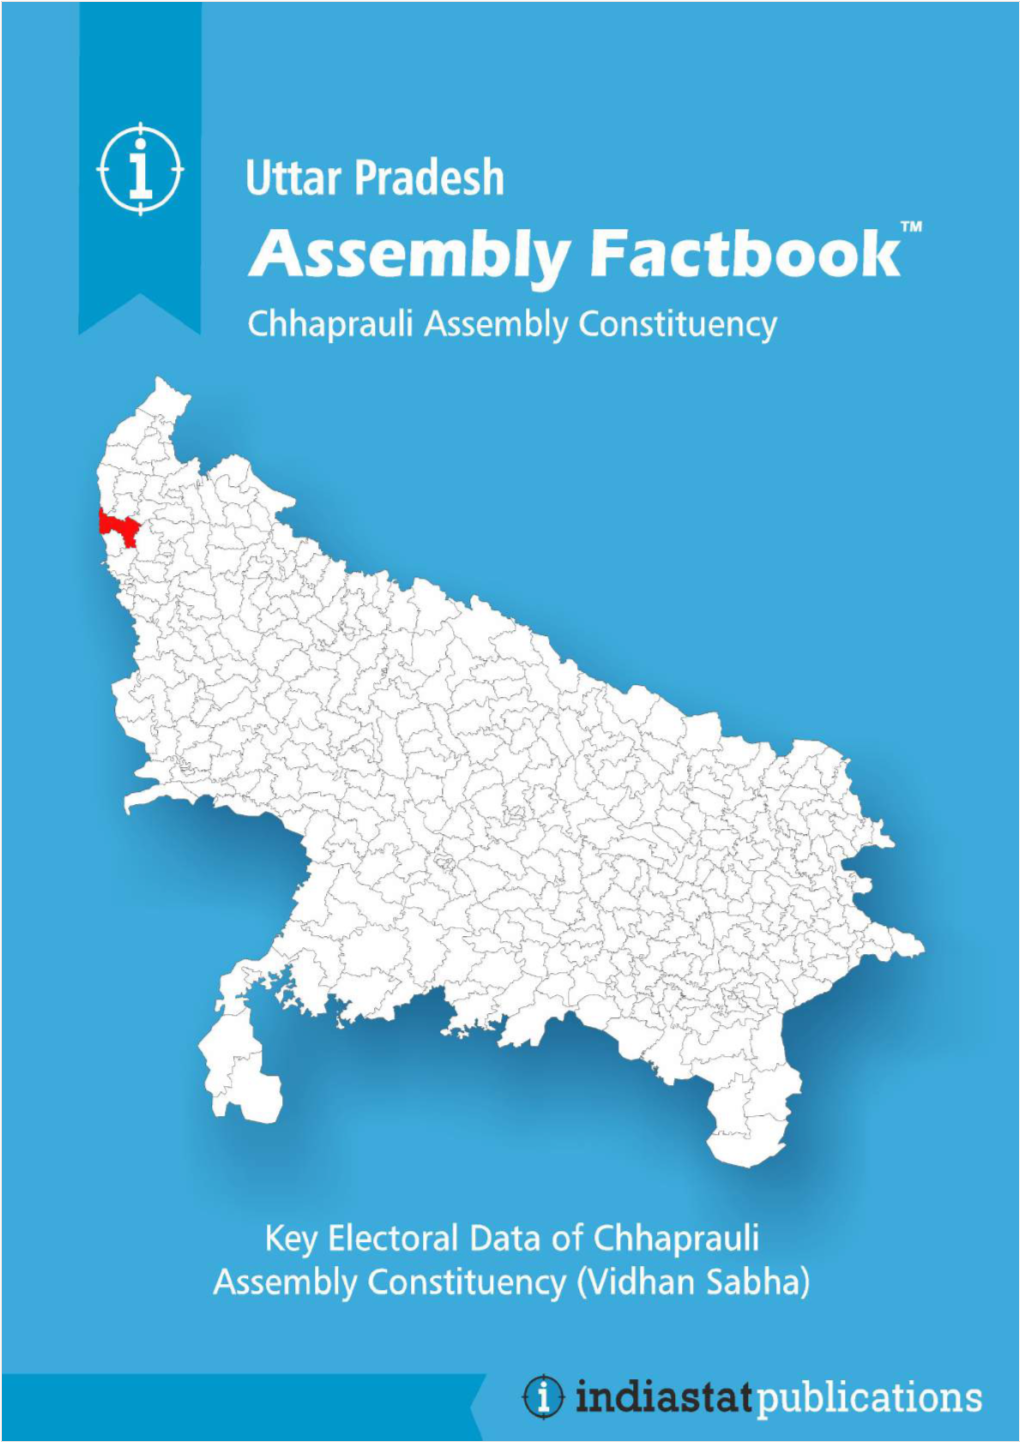 Chhaprauli Assembly Uttar Pradesh Factbook